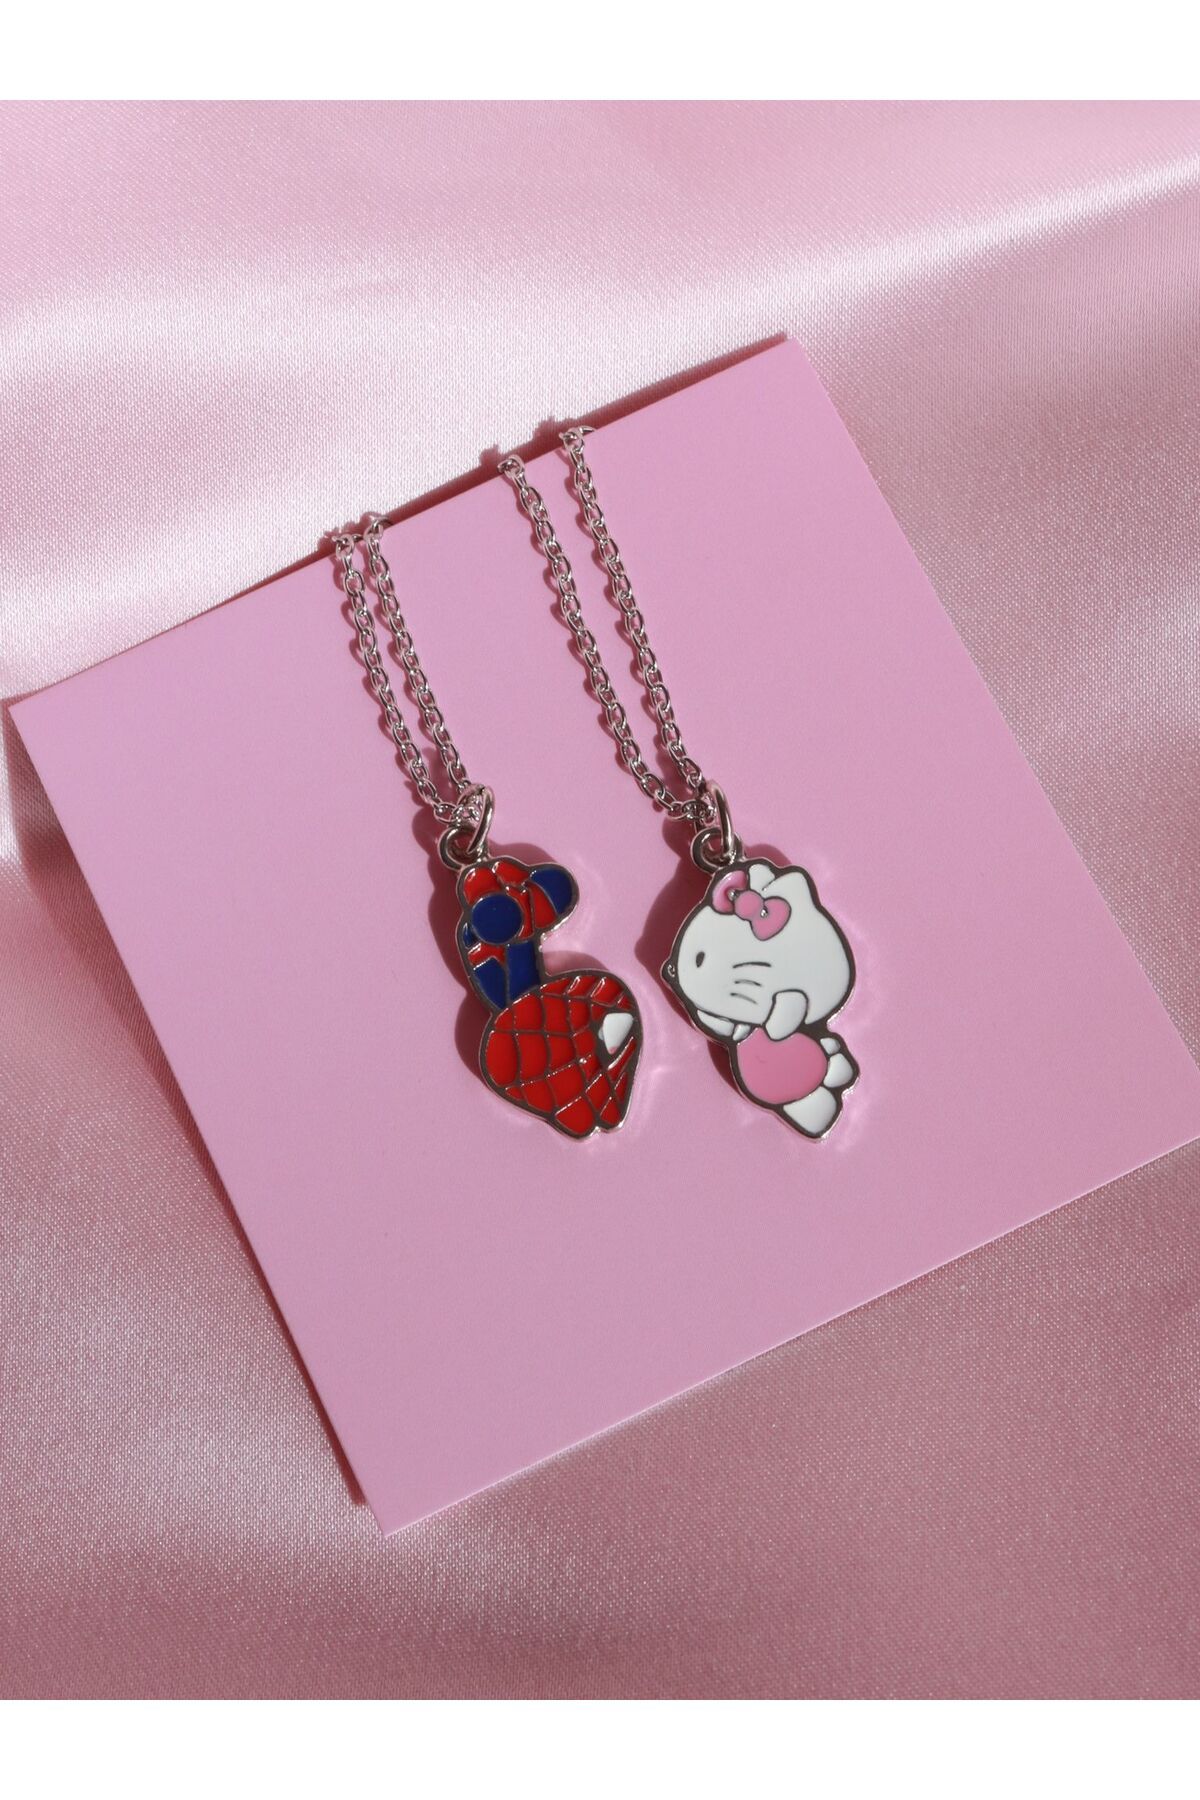 Hello Kitty Kawaii Sanrio My Melody Pendant Leather Rope Necklace | eBay